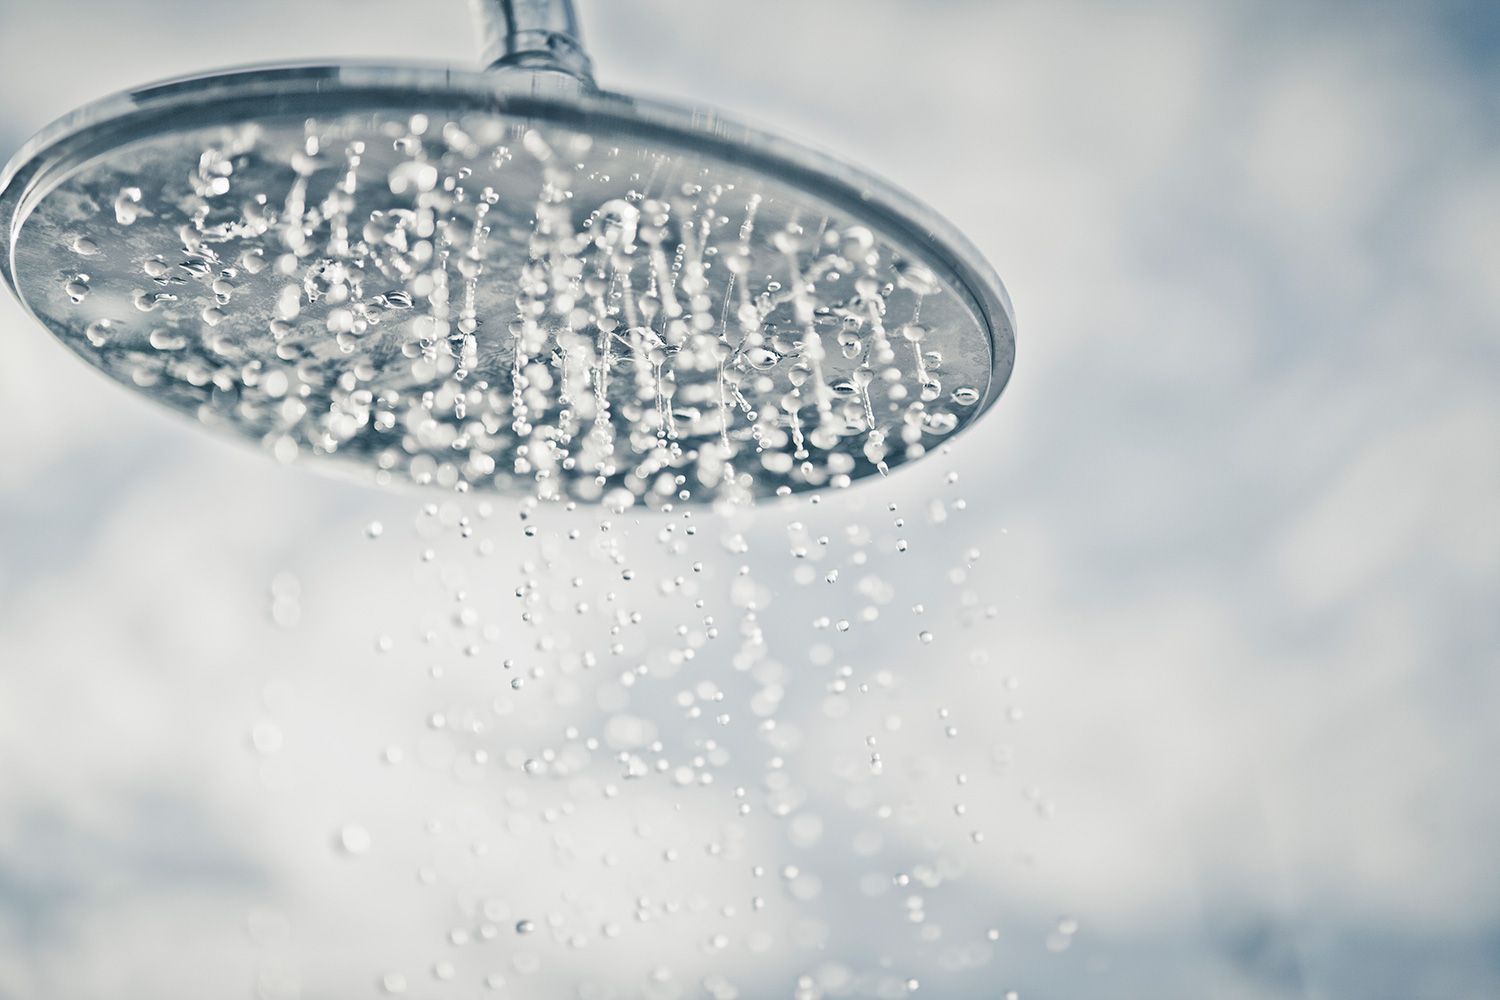 Closeup of showerhead